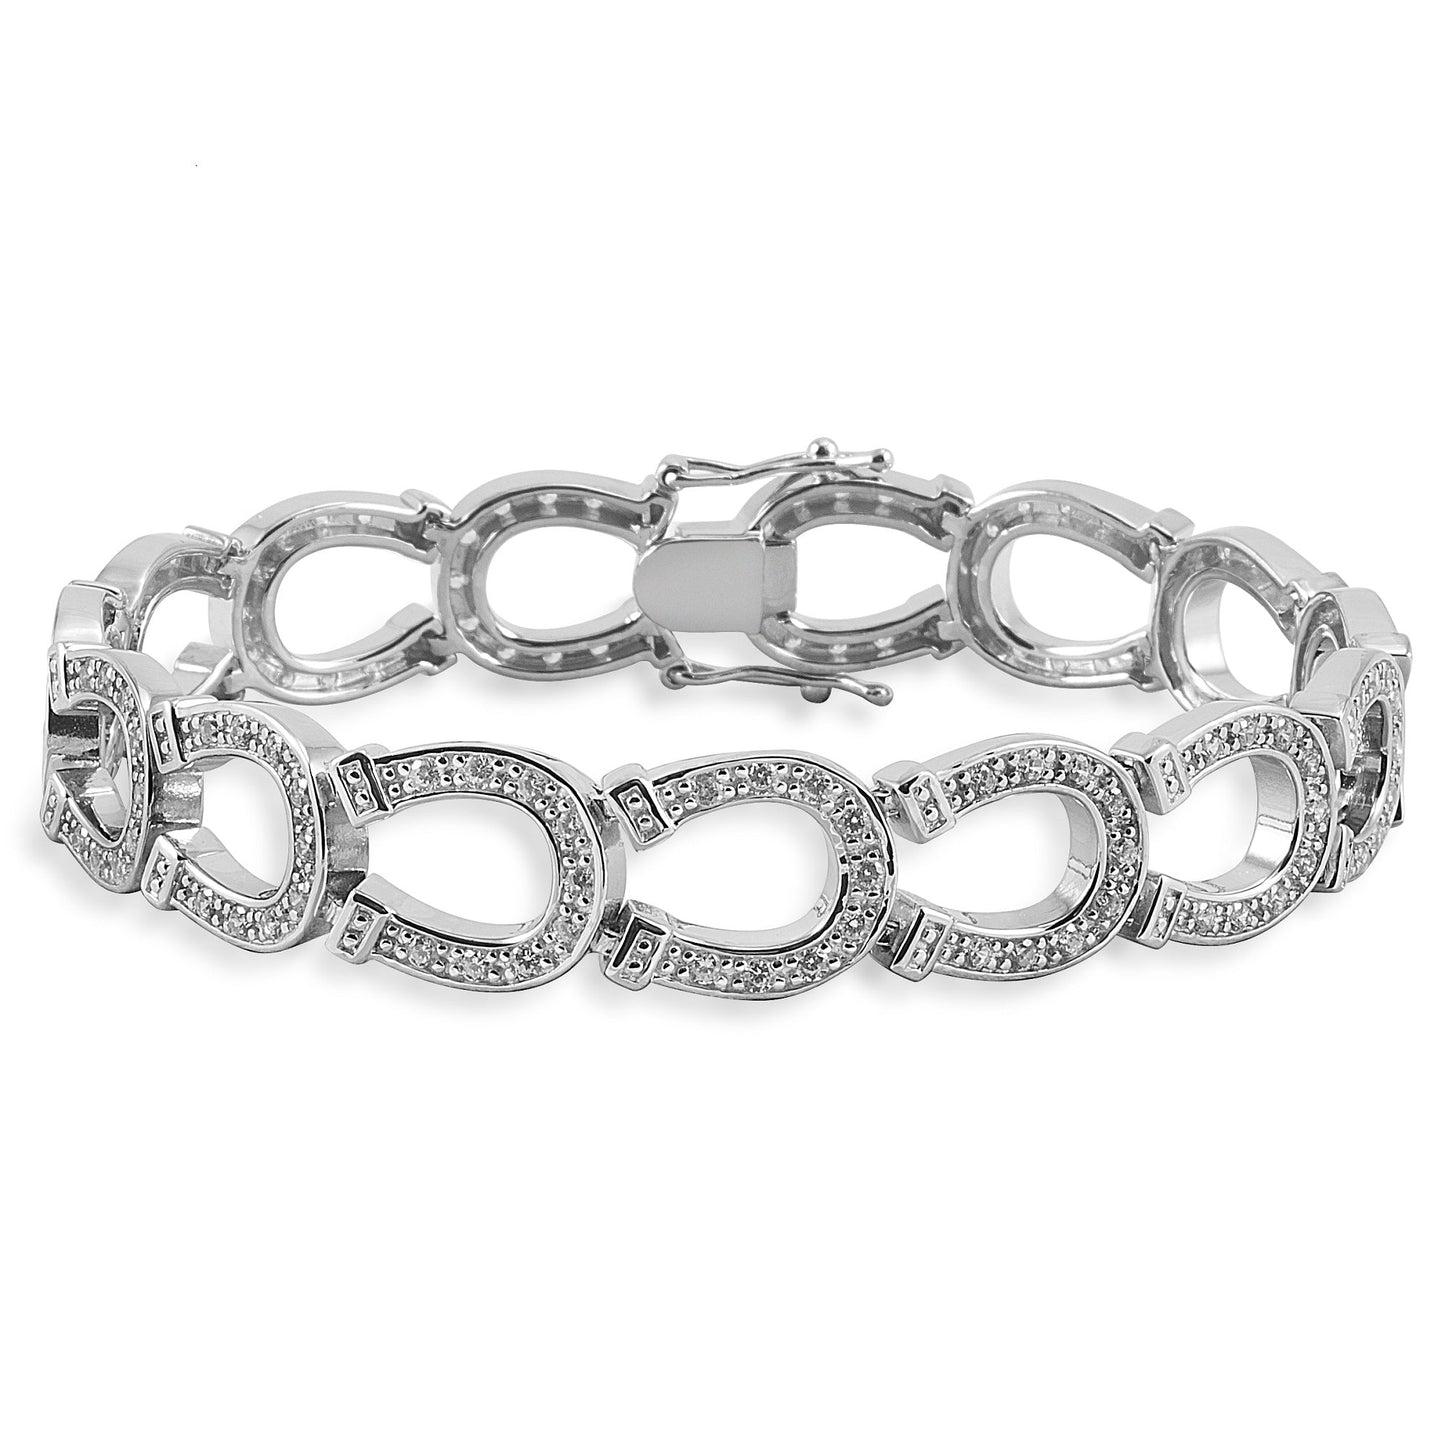 Alt text: Kelly Herd sparkling silver equestrian-themed link bracelet jewelry.